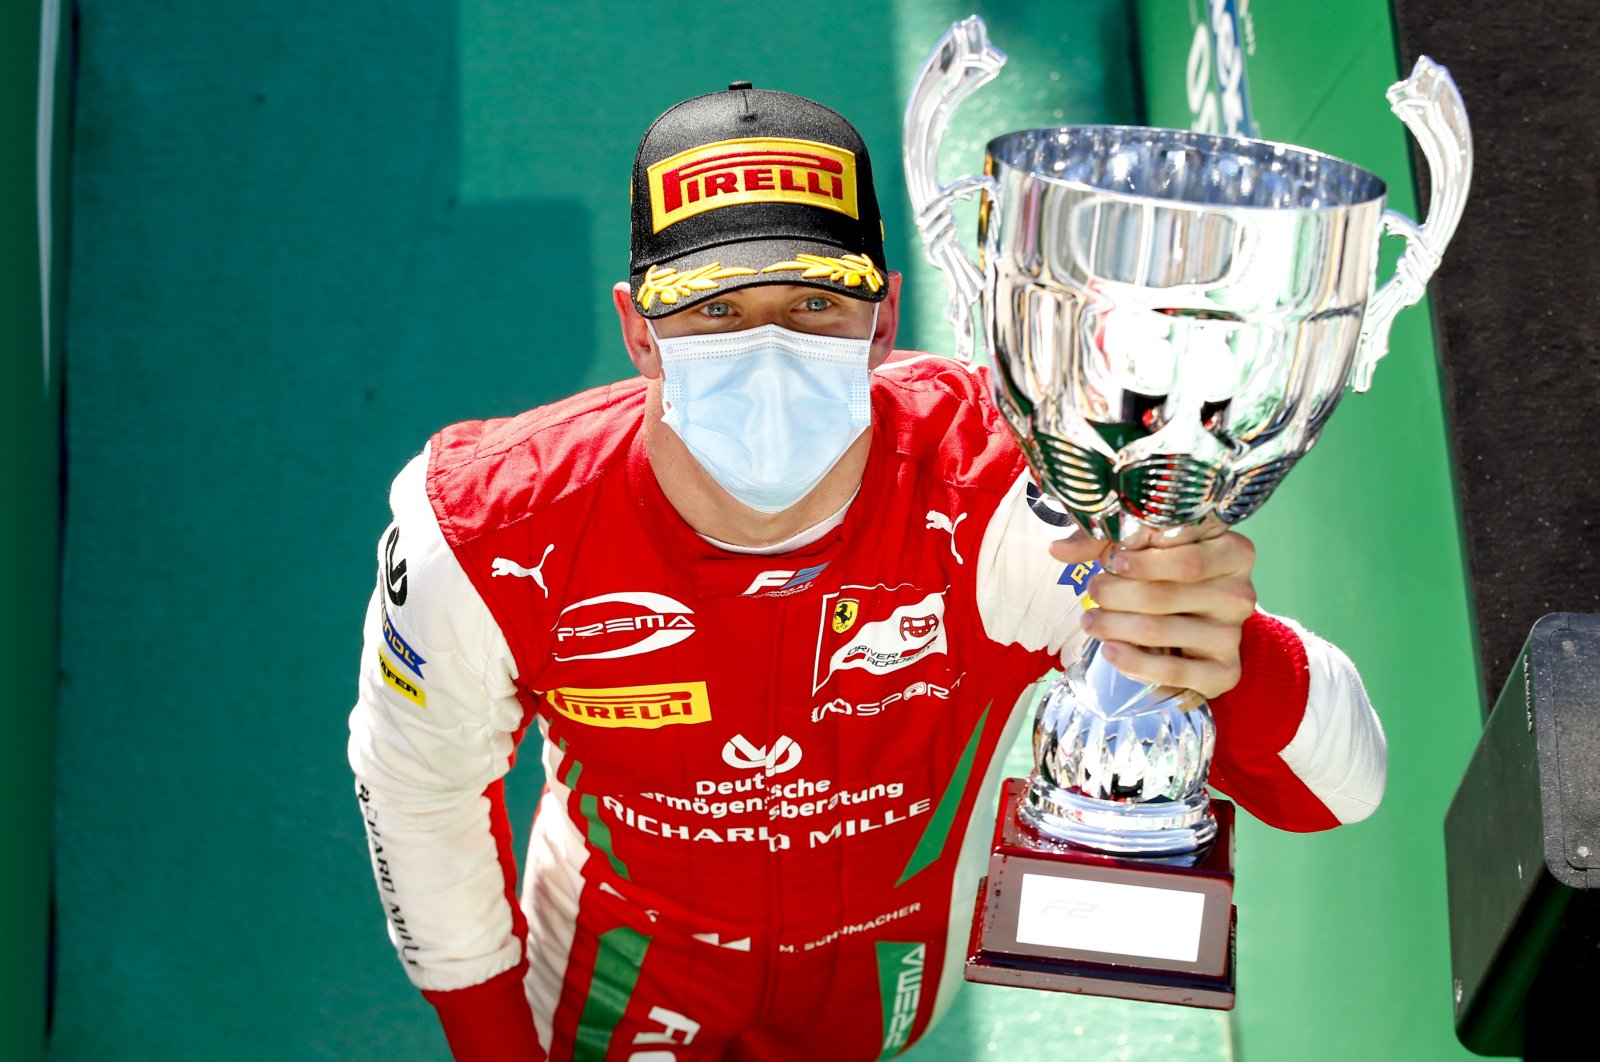 Mick Schumacher celebrates winning the Formula 2 race in Monza, Italy, Sept. 5, 2020. (Reuters Photo)